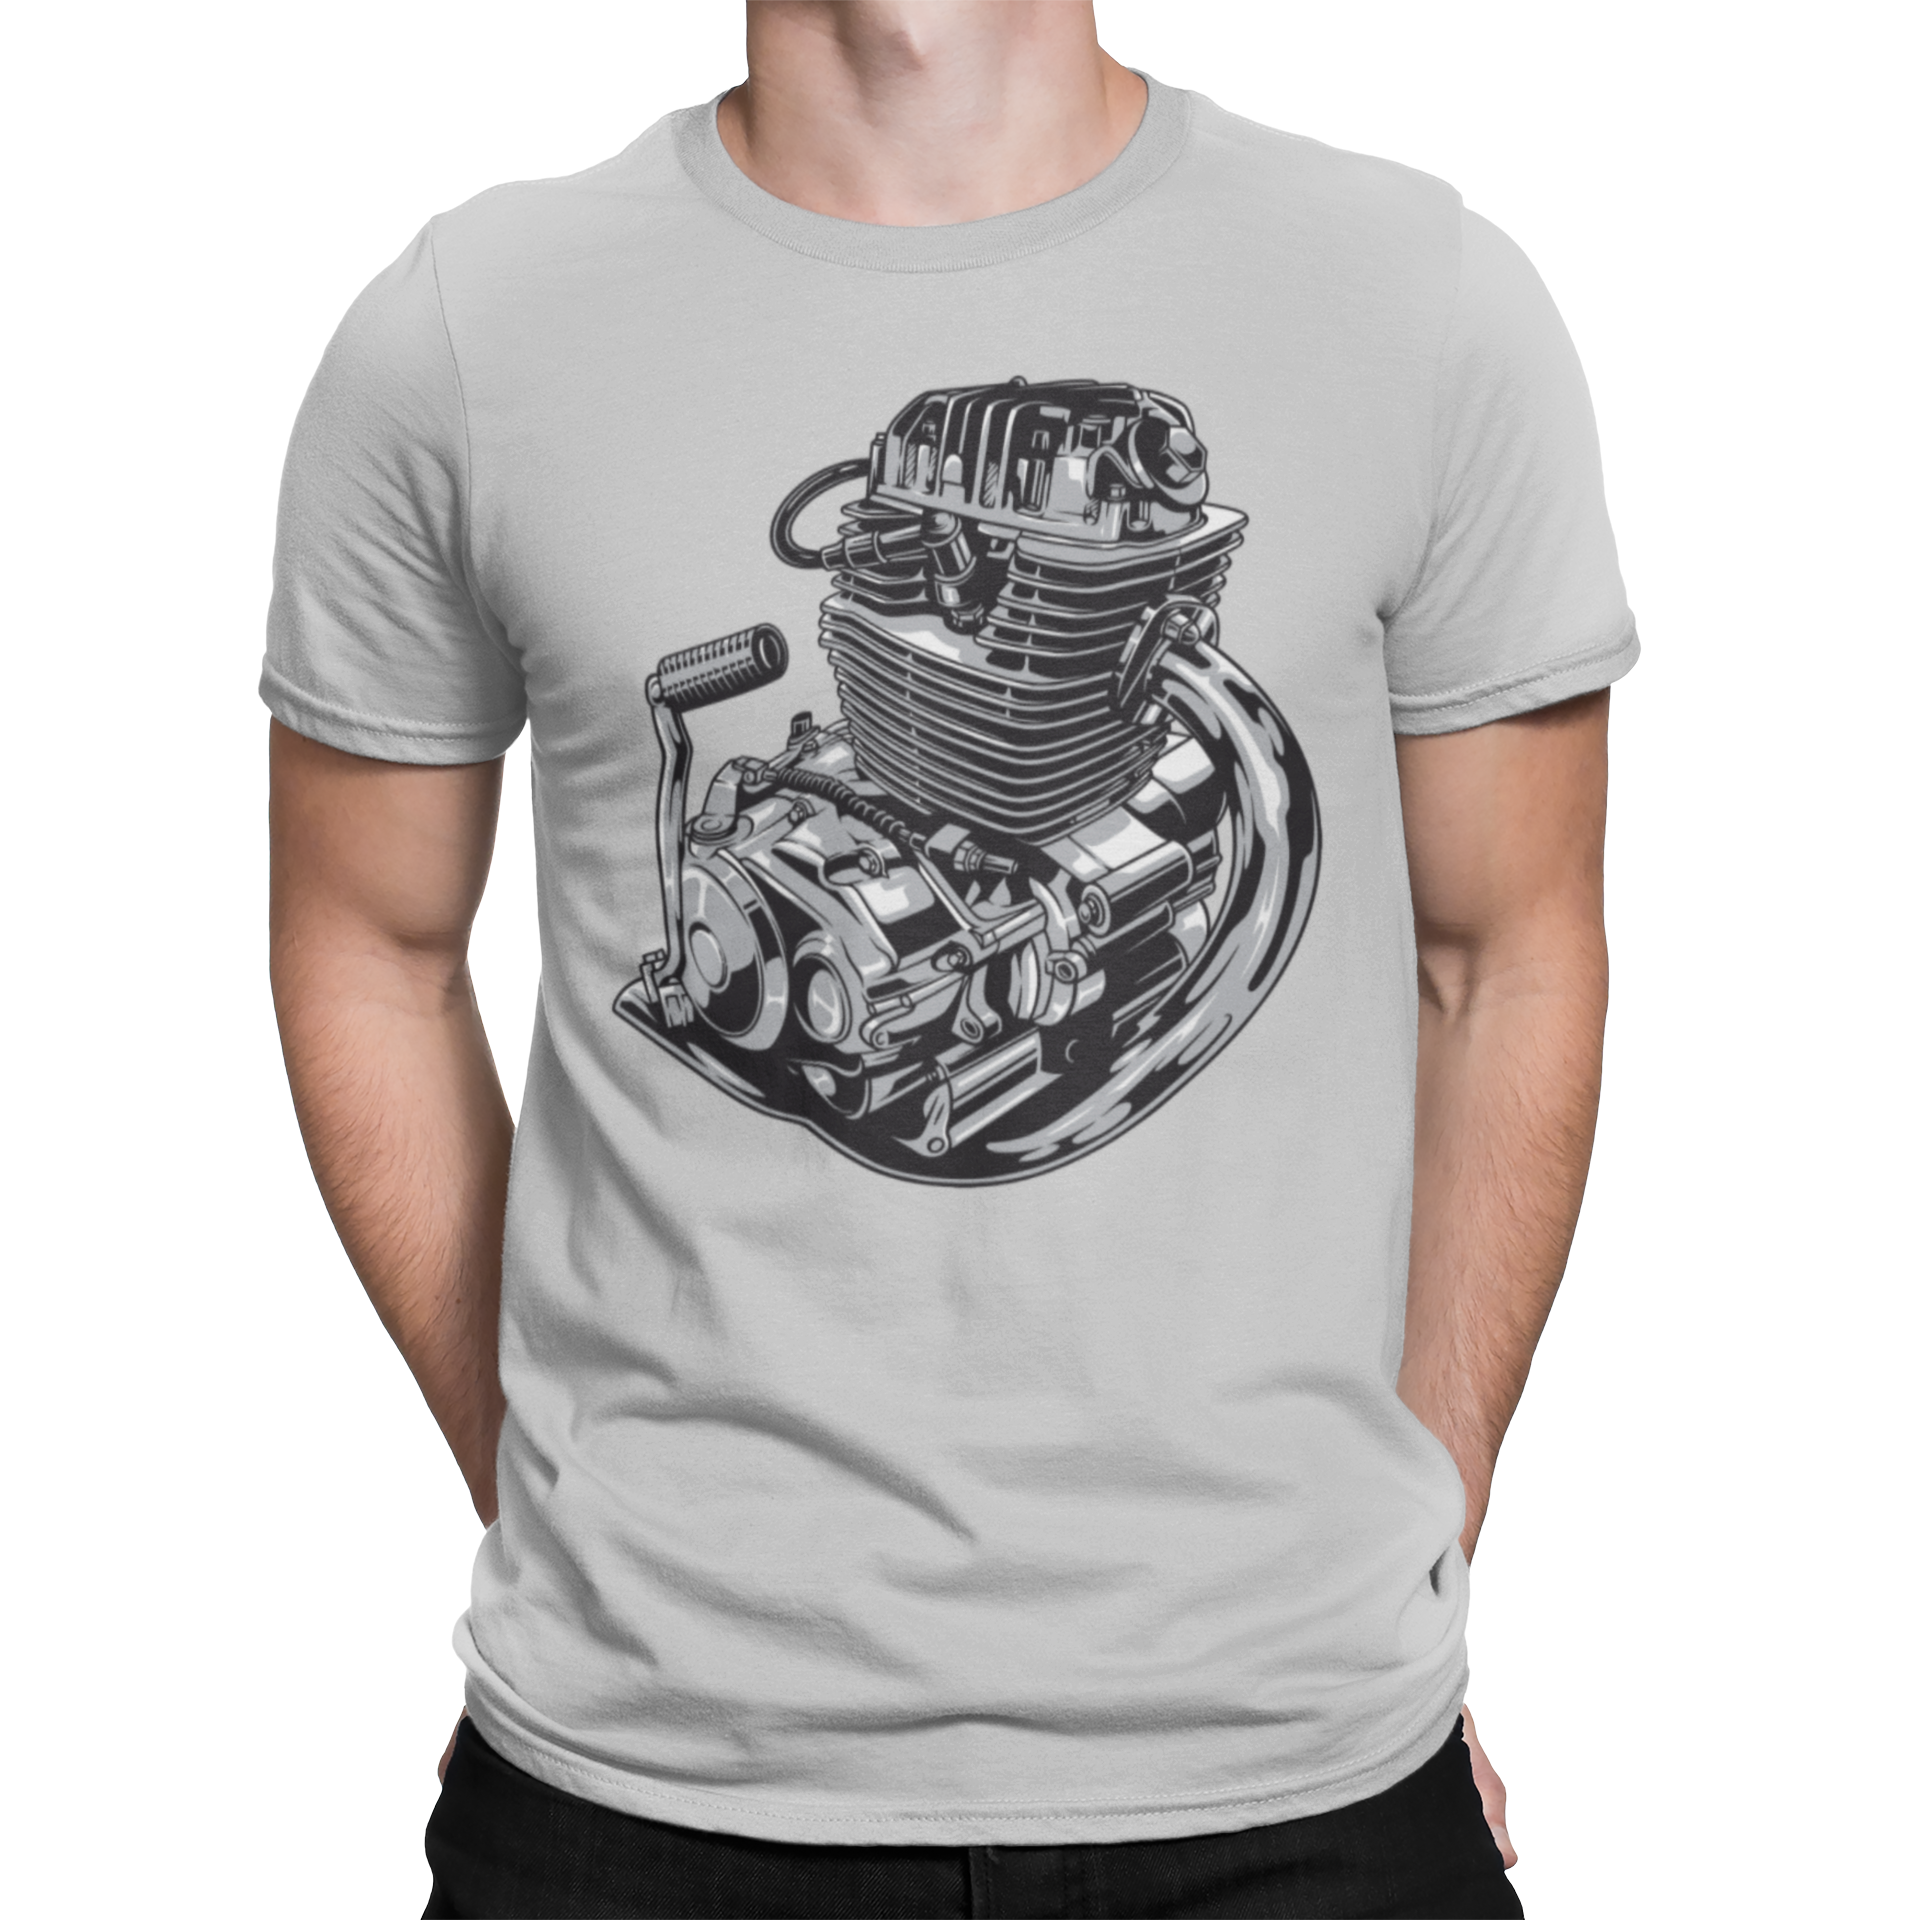 Camiseta Motor Harley Davidson